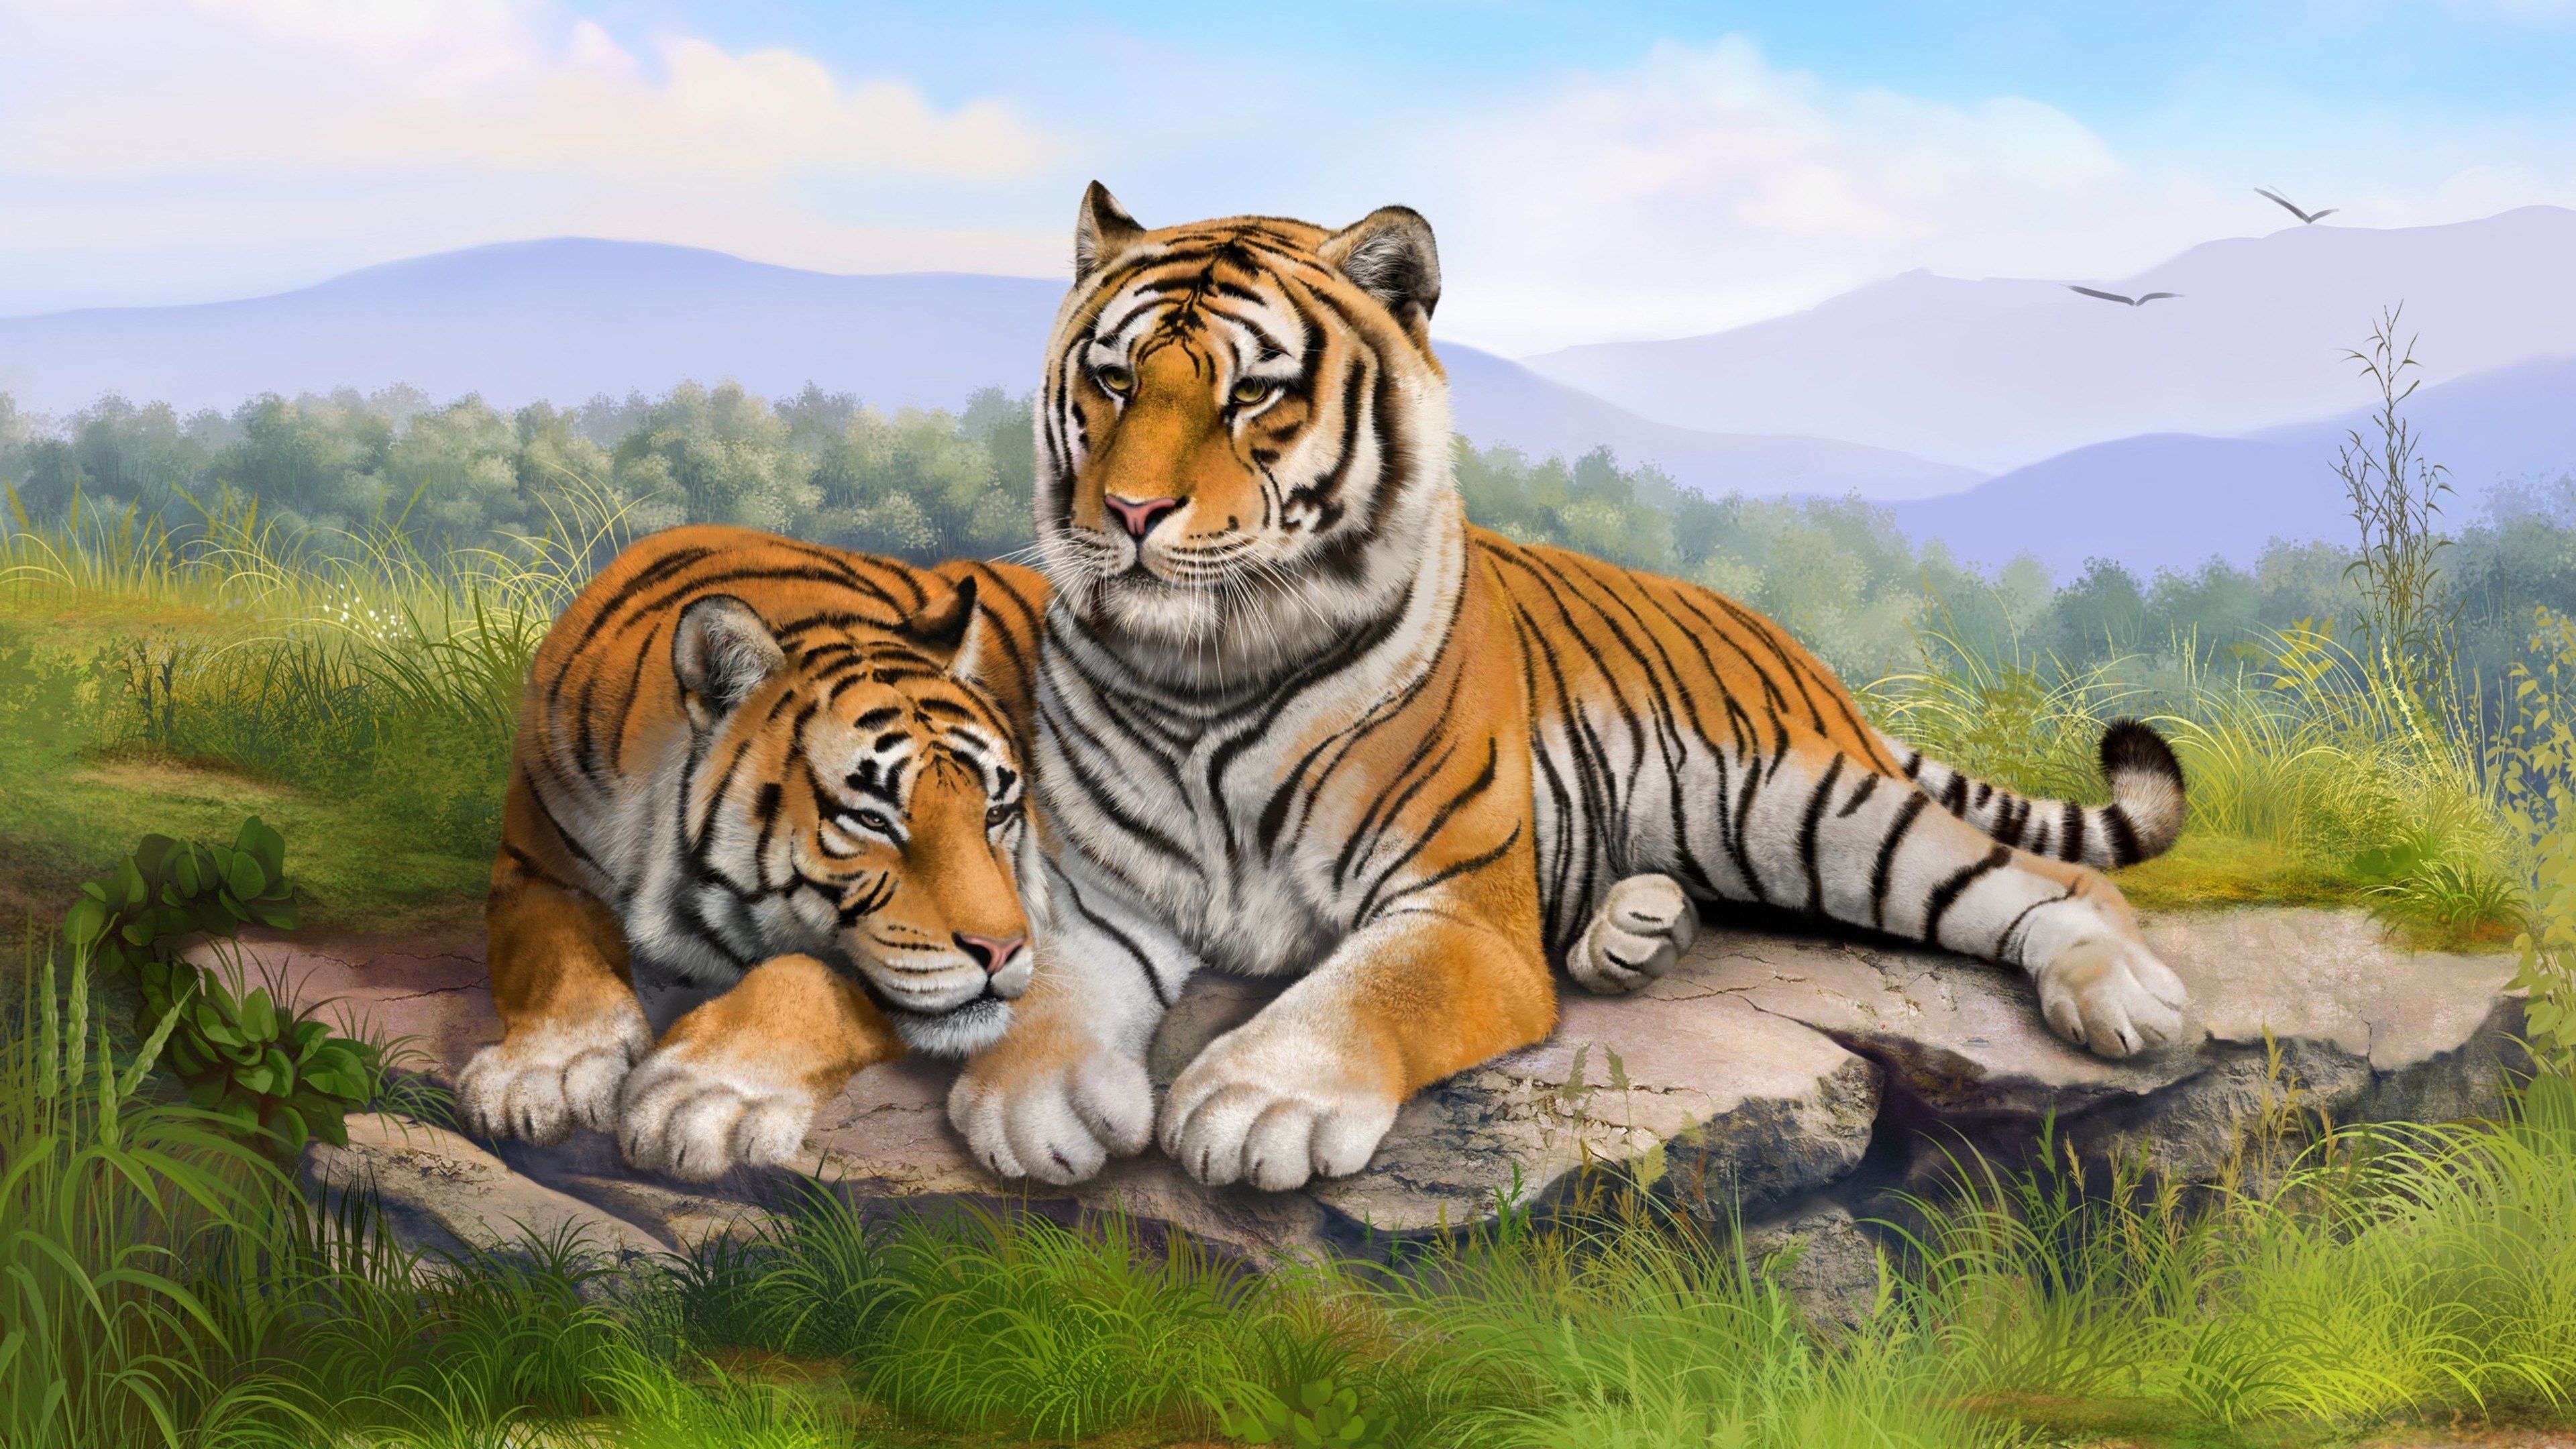 tigers 4k desktop wallpaper HD free download